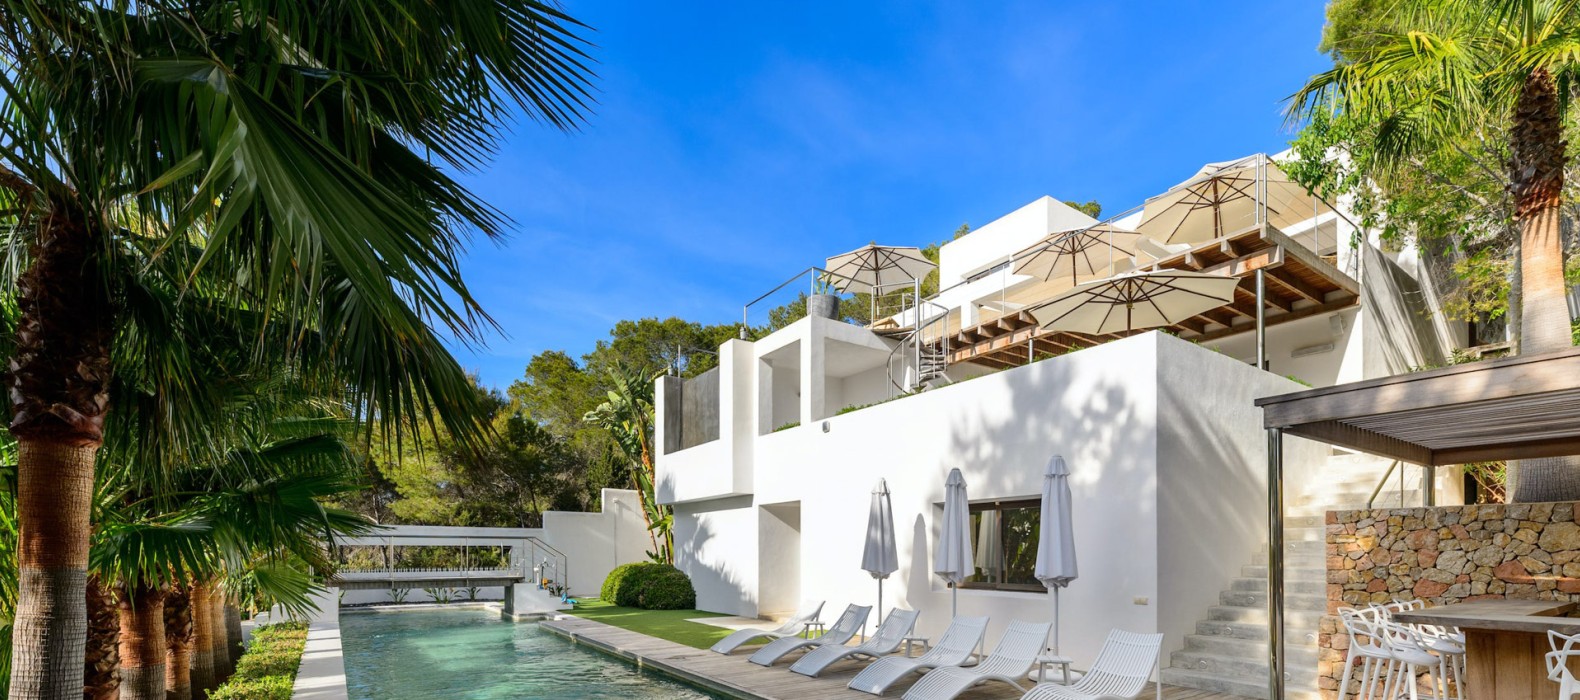 Exterior pool view of Casa Elegance in Ibiza